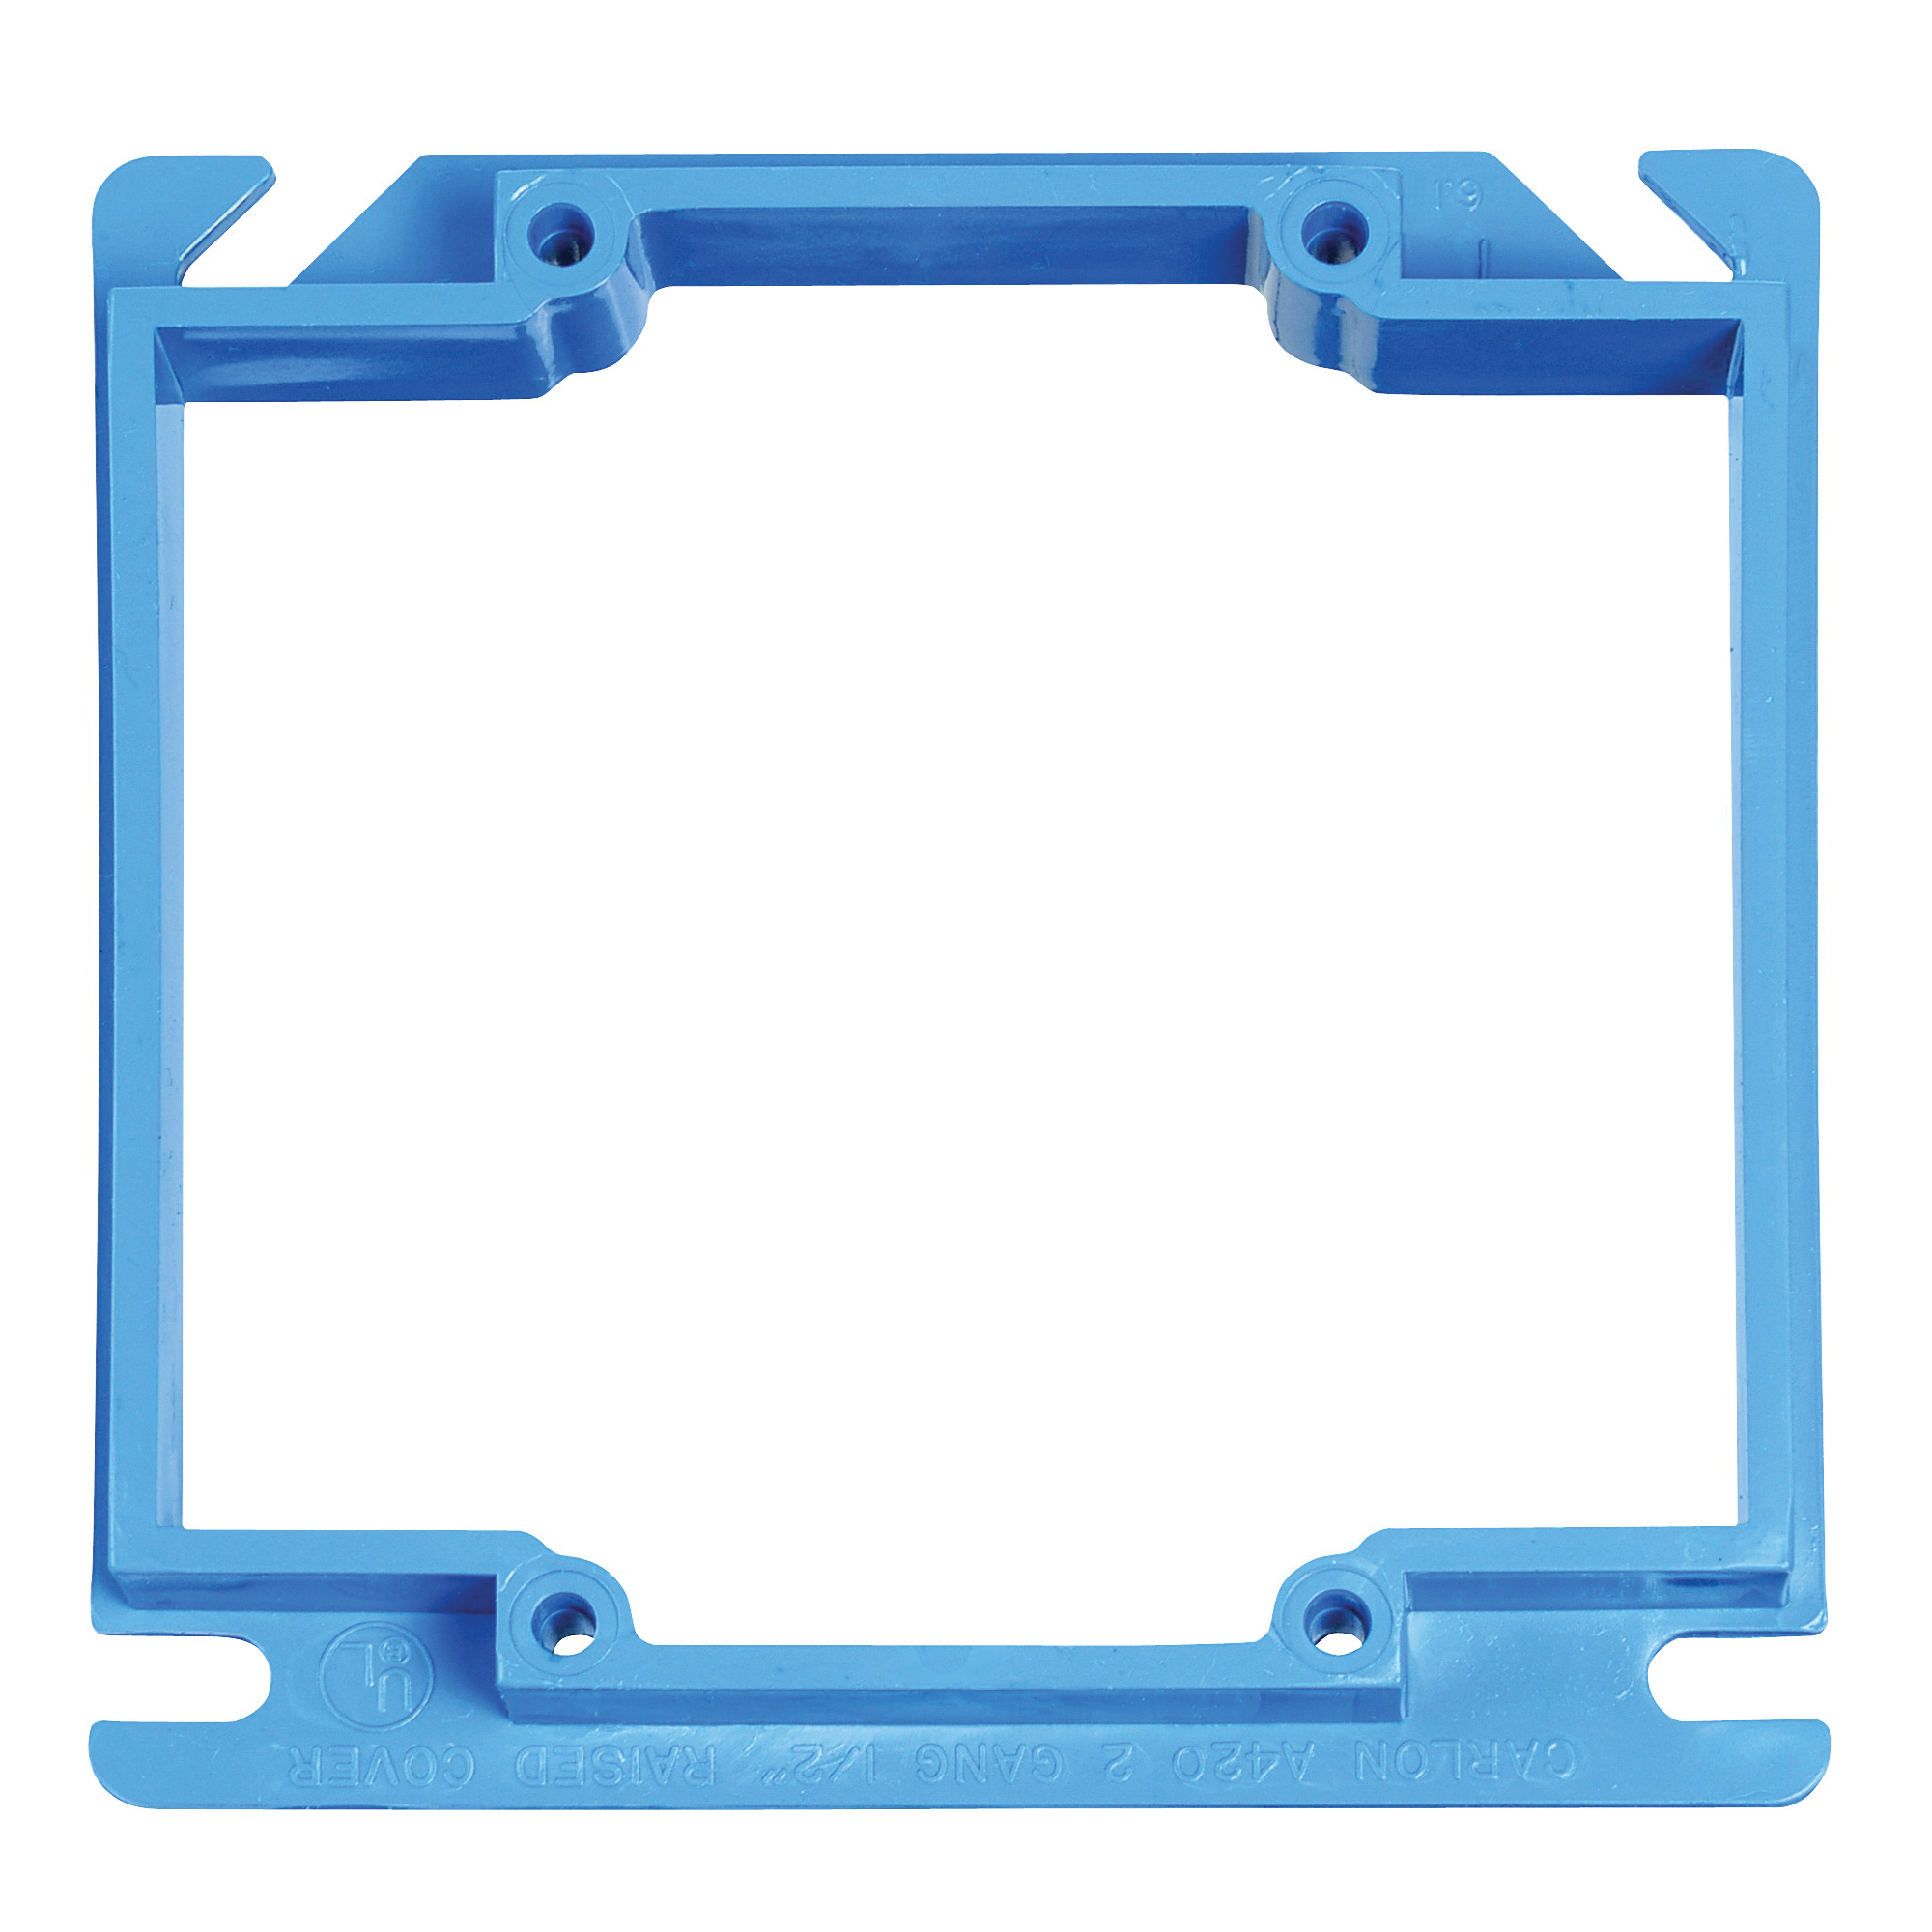 Carlon A420RR Electrical Box Cover, 4 in L, 4 in W, Square, PVC (Plastic), Blue